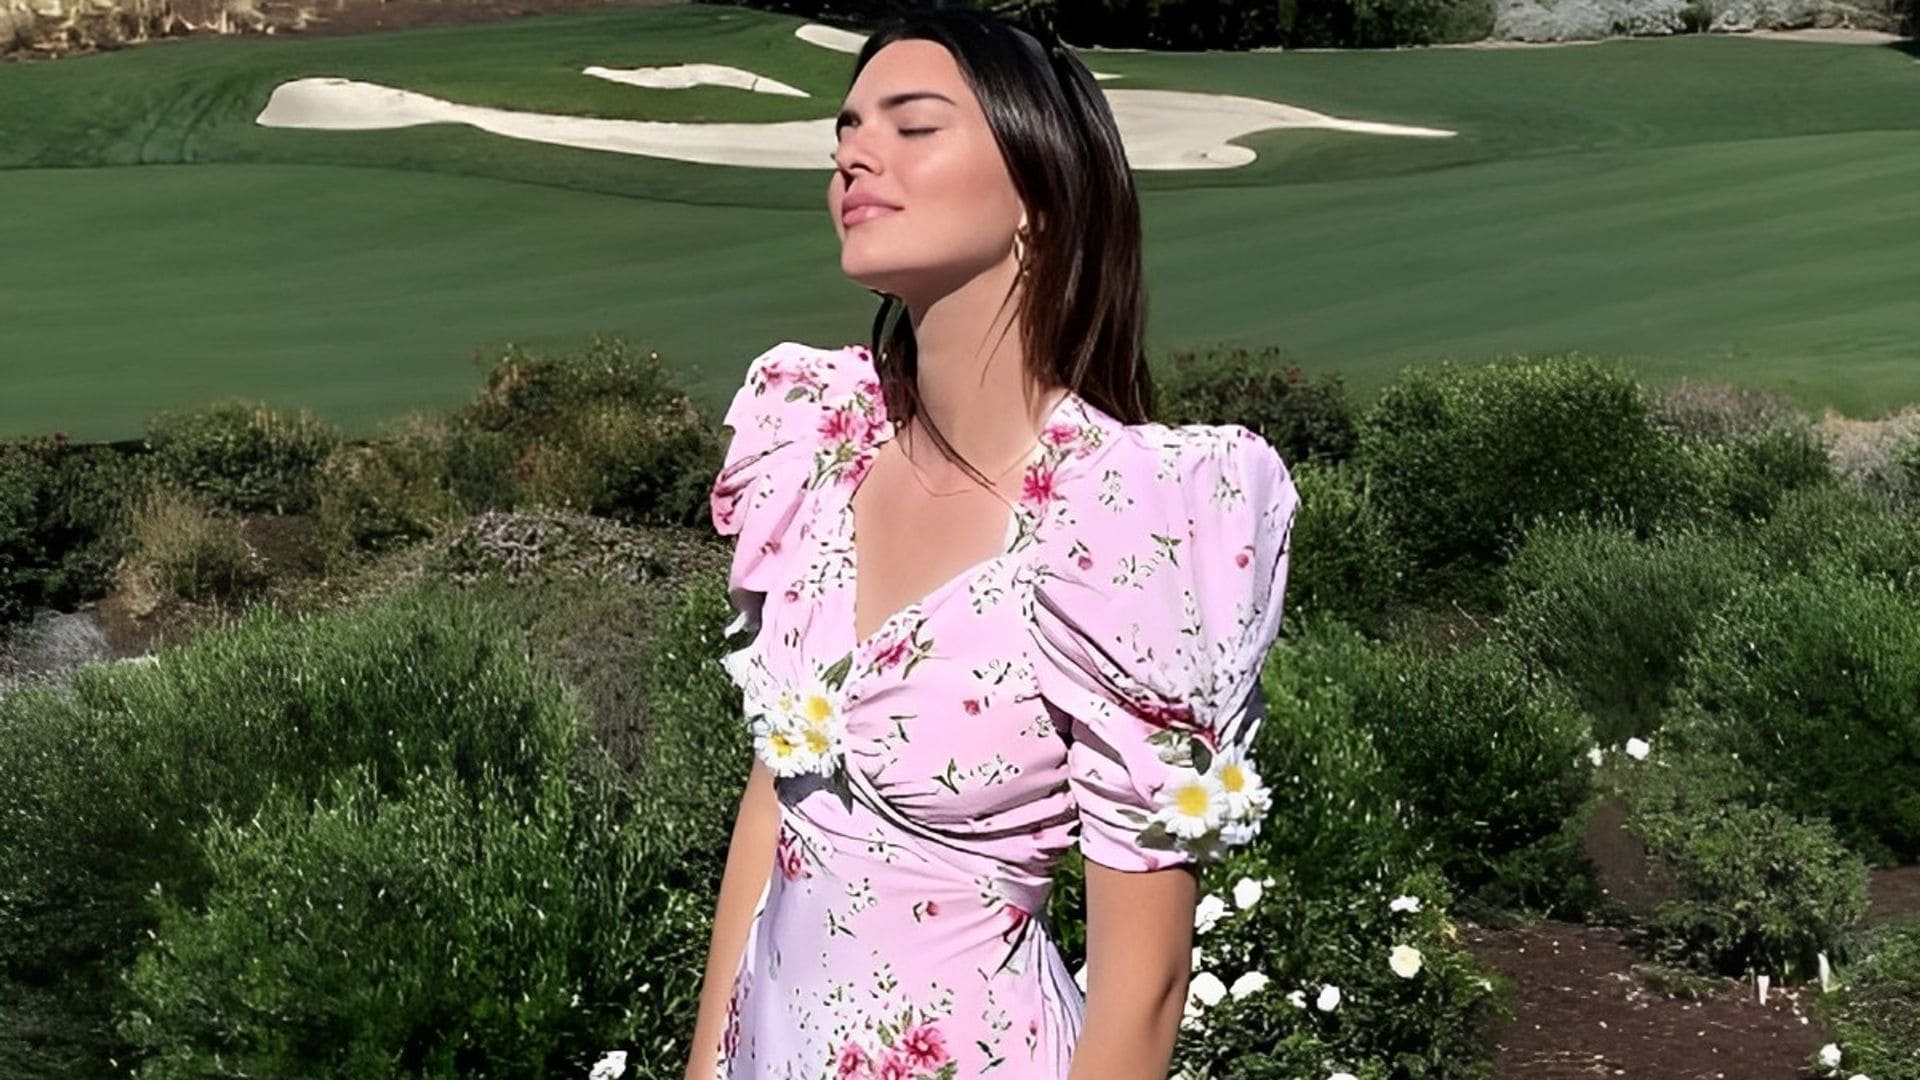 Descubre cómo copiar la estética 'cottagecore' que ha enamorado a Kendall Jenner